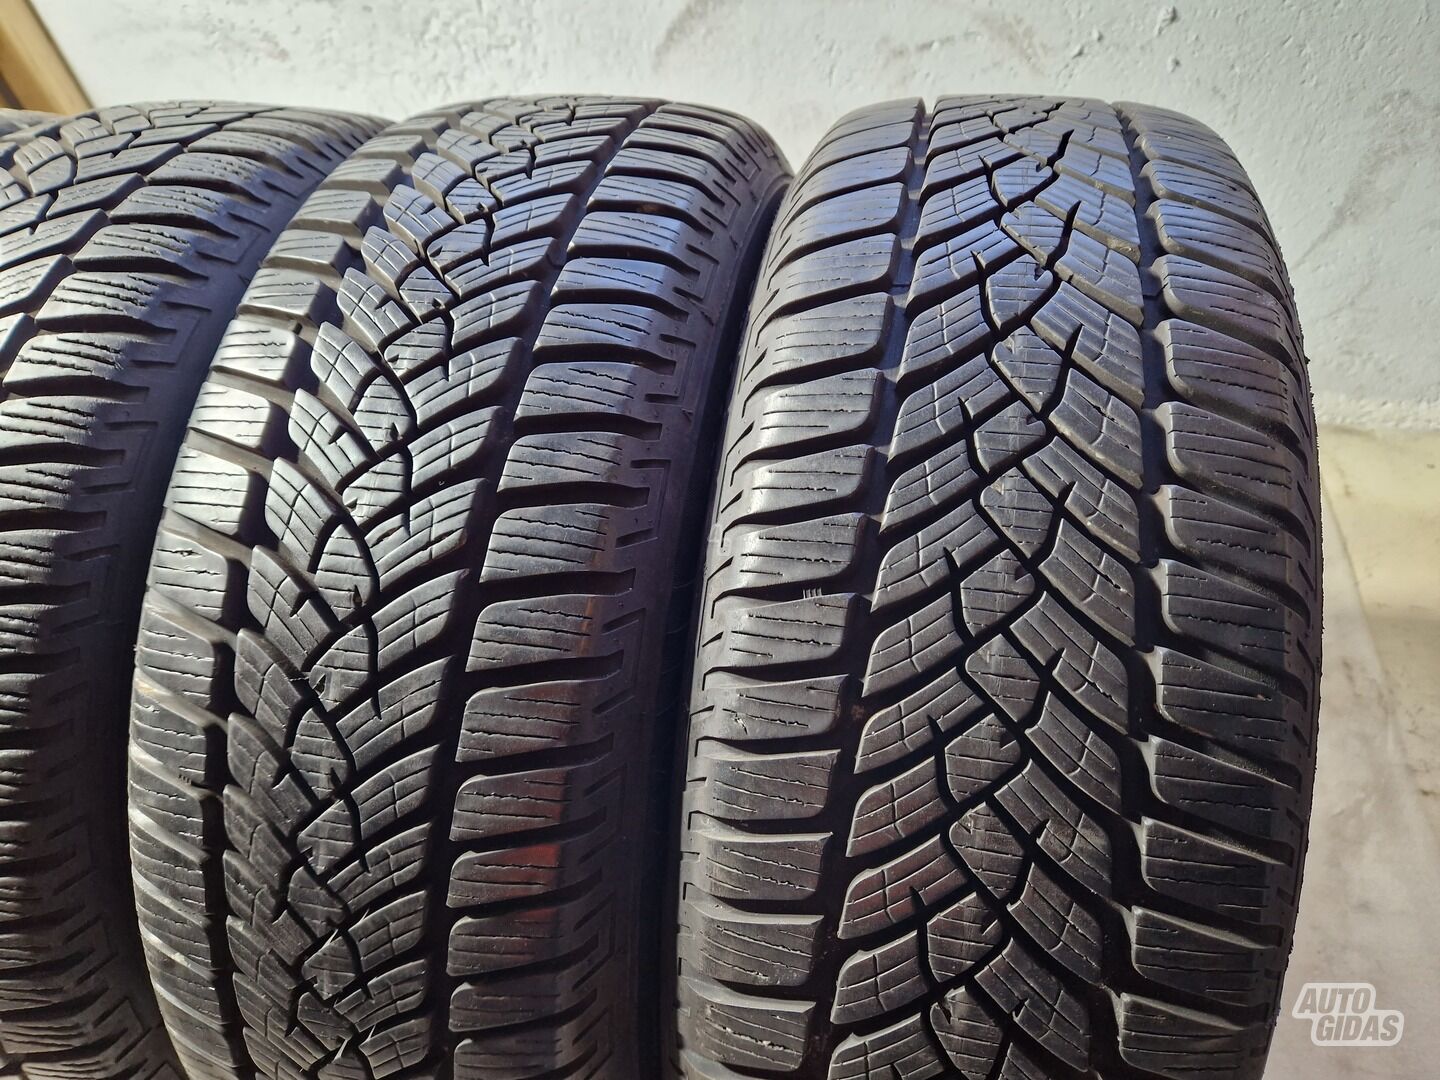 Fulda 8-9mm, 2021m R16 winter tyres passanger car